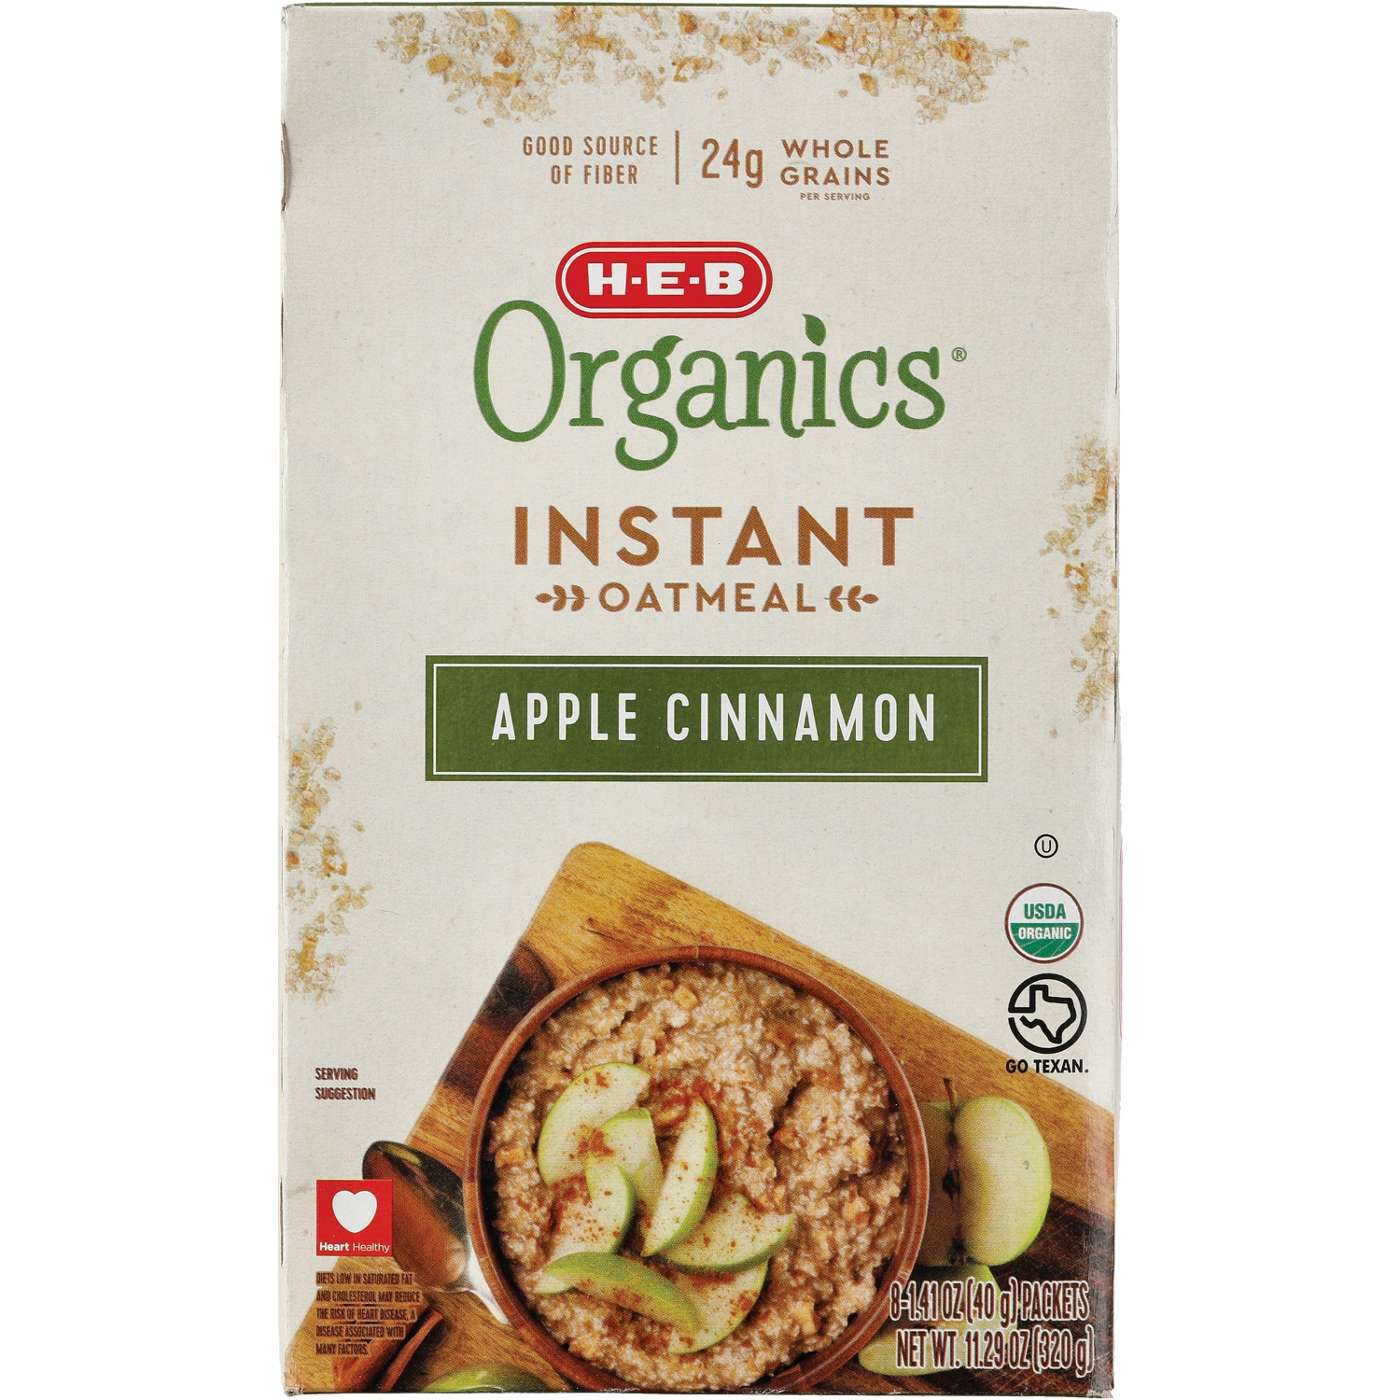 H-E-B Organics Instant Oatmeal - Apple Cinnamon; image 1 of 2